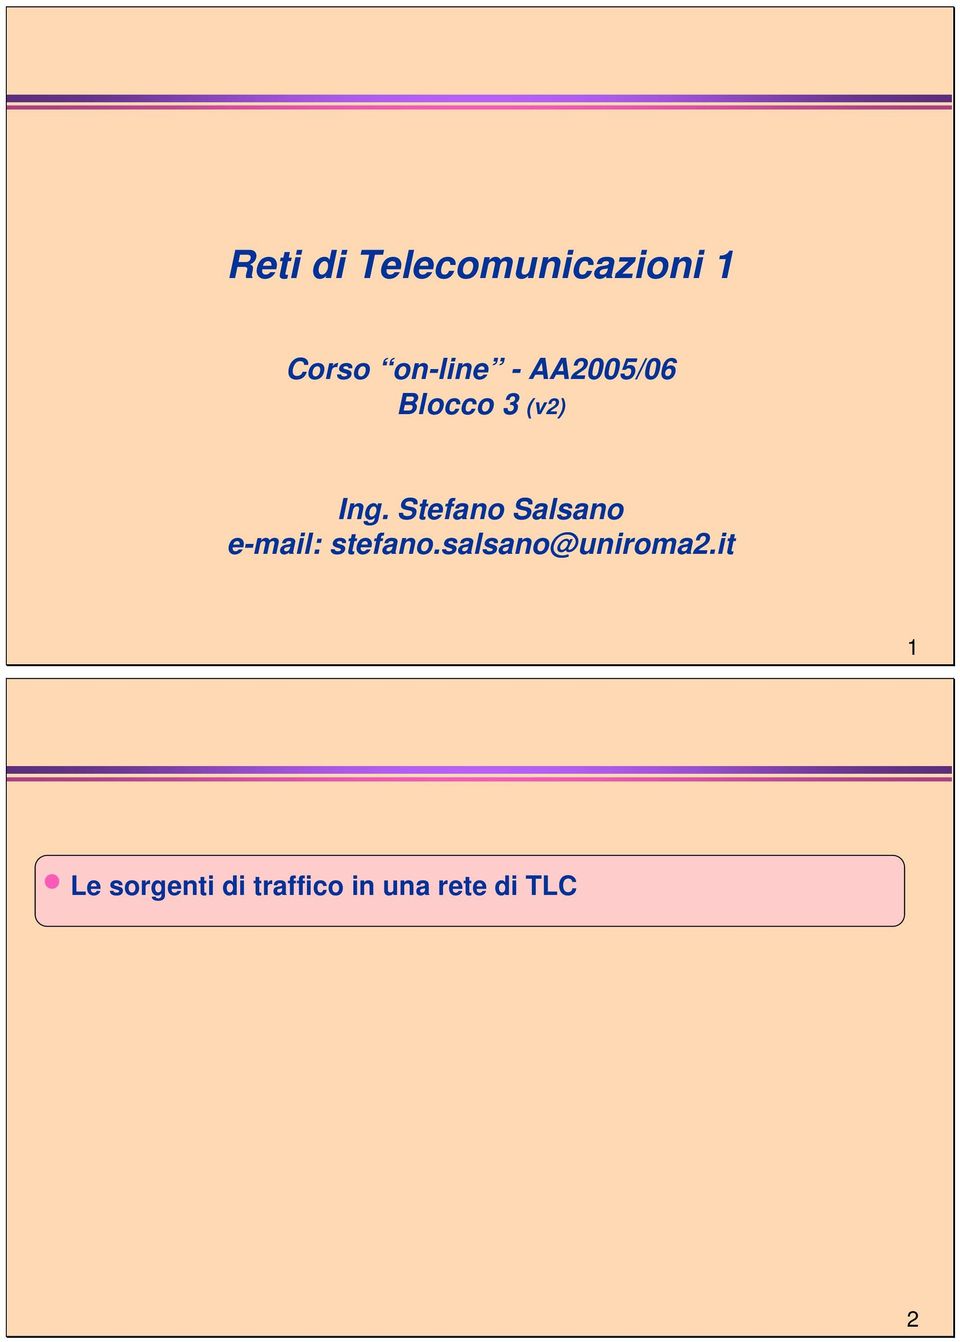 Stefano Salsano e-mail: stefano.